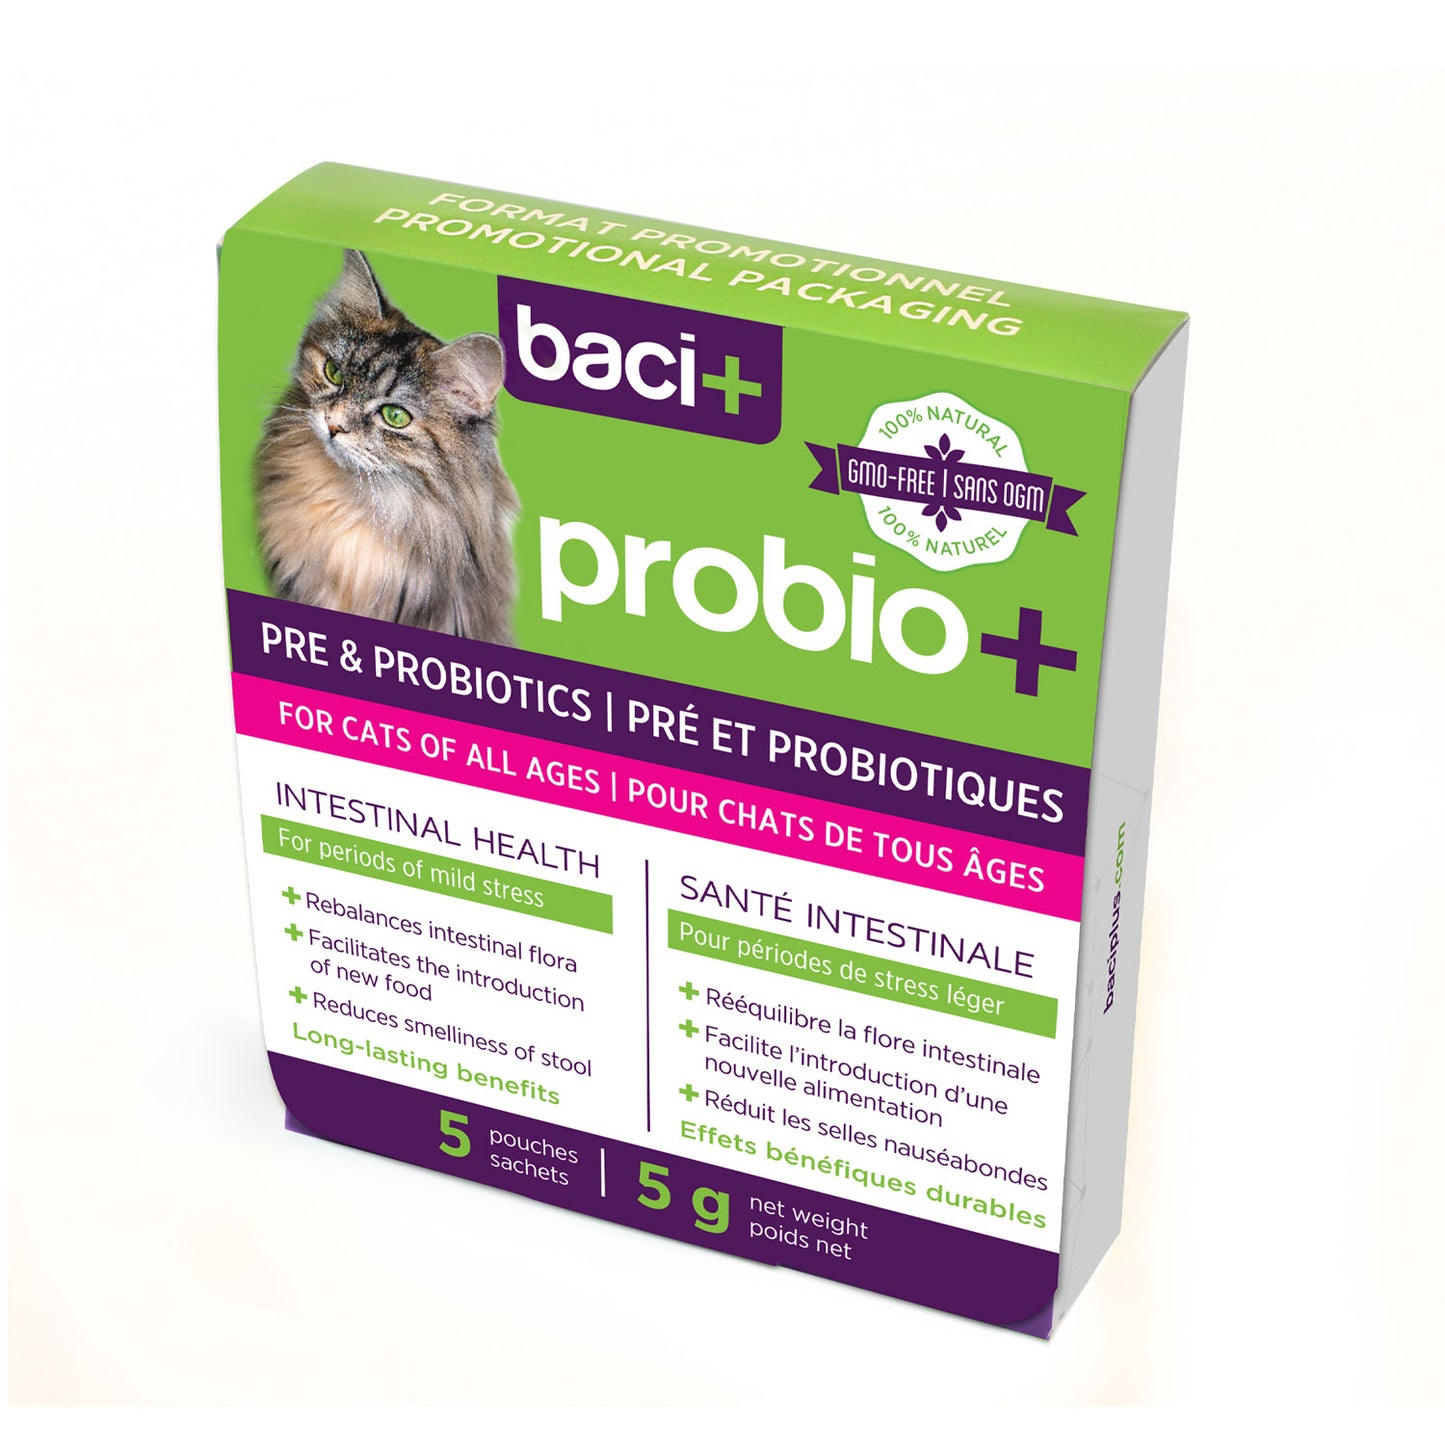 Pre and probiotics  • Intestinal health • Complete line  | Breeders | Cats